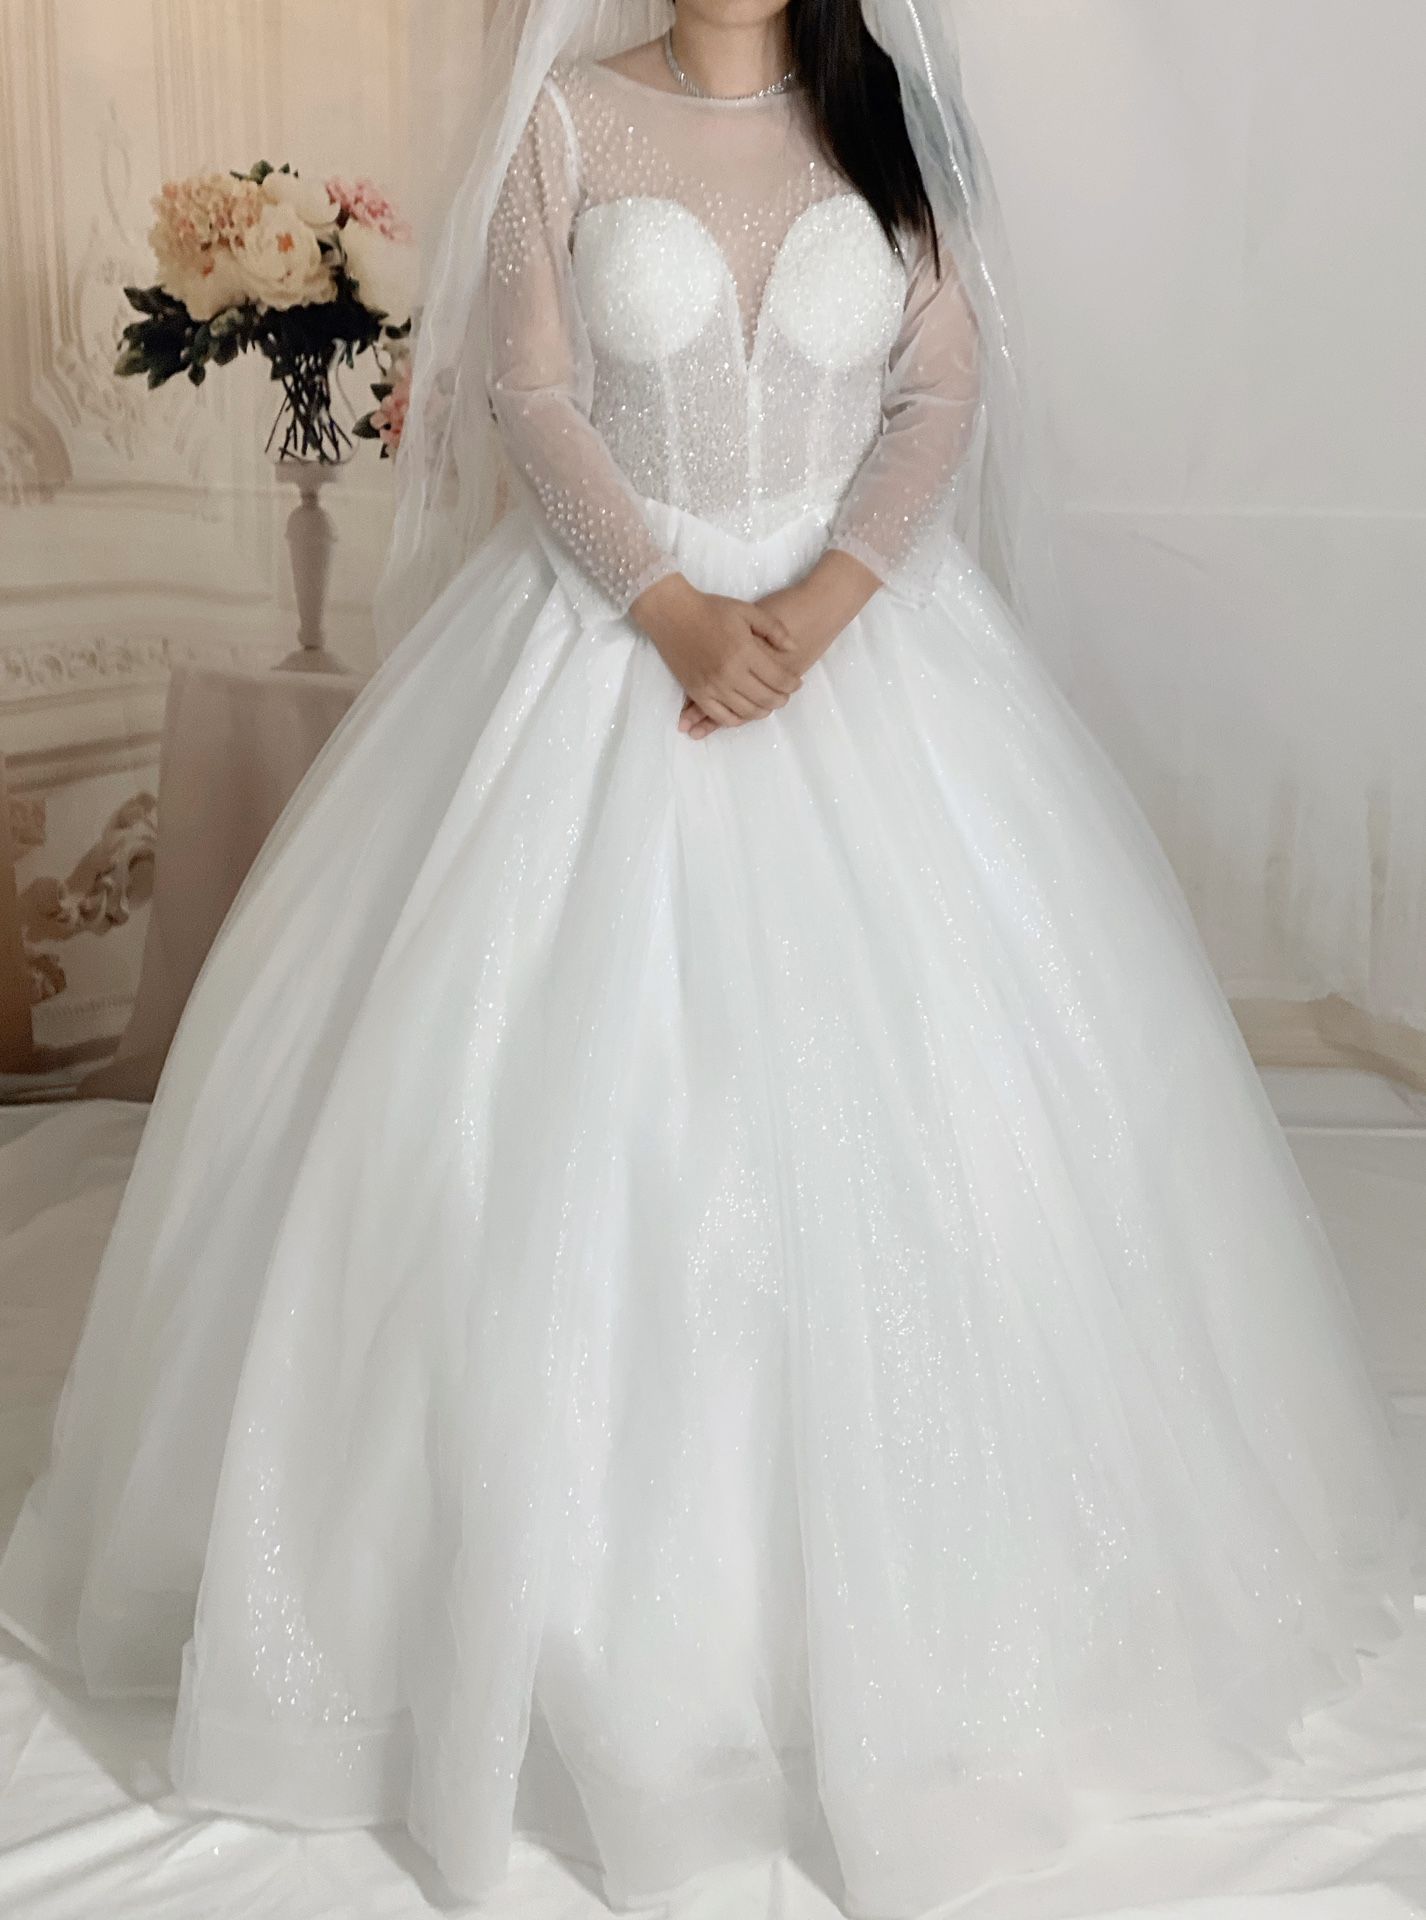 White bling ballgown wedding dress, size 2-4